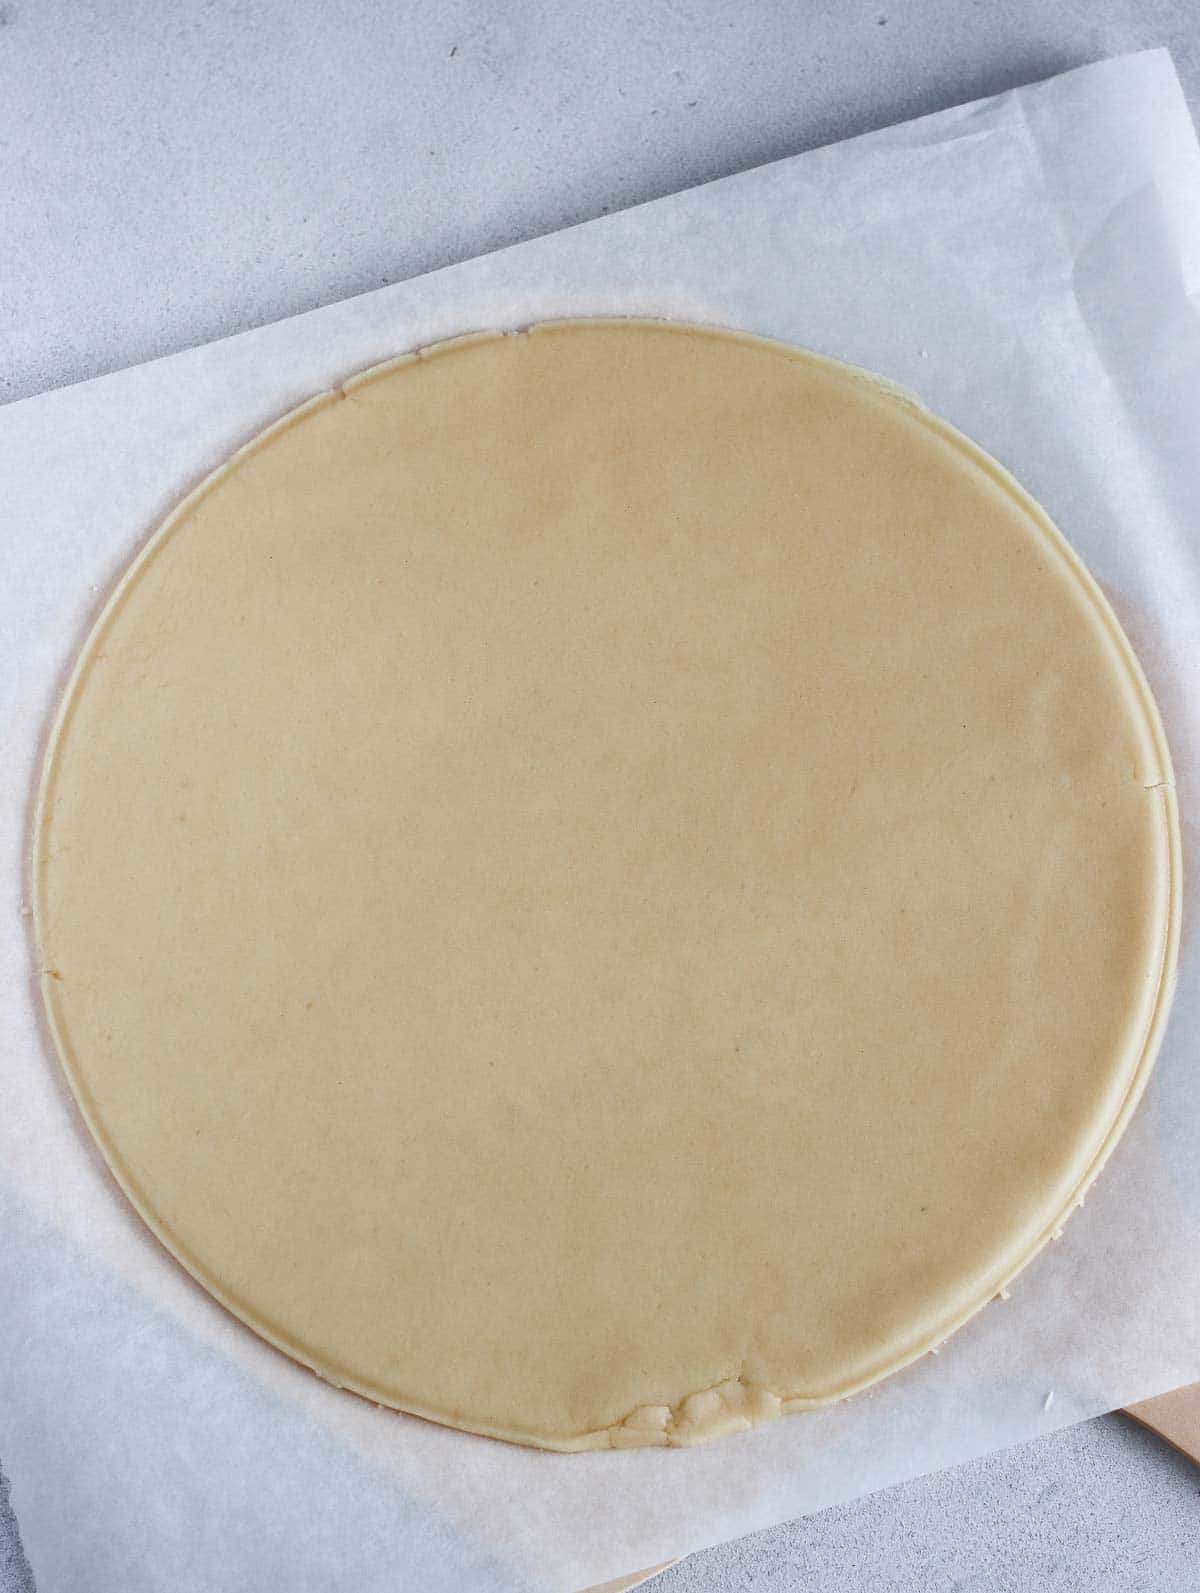 sugar cookie dough in a round shape